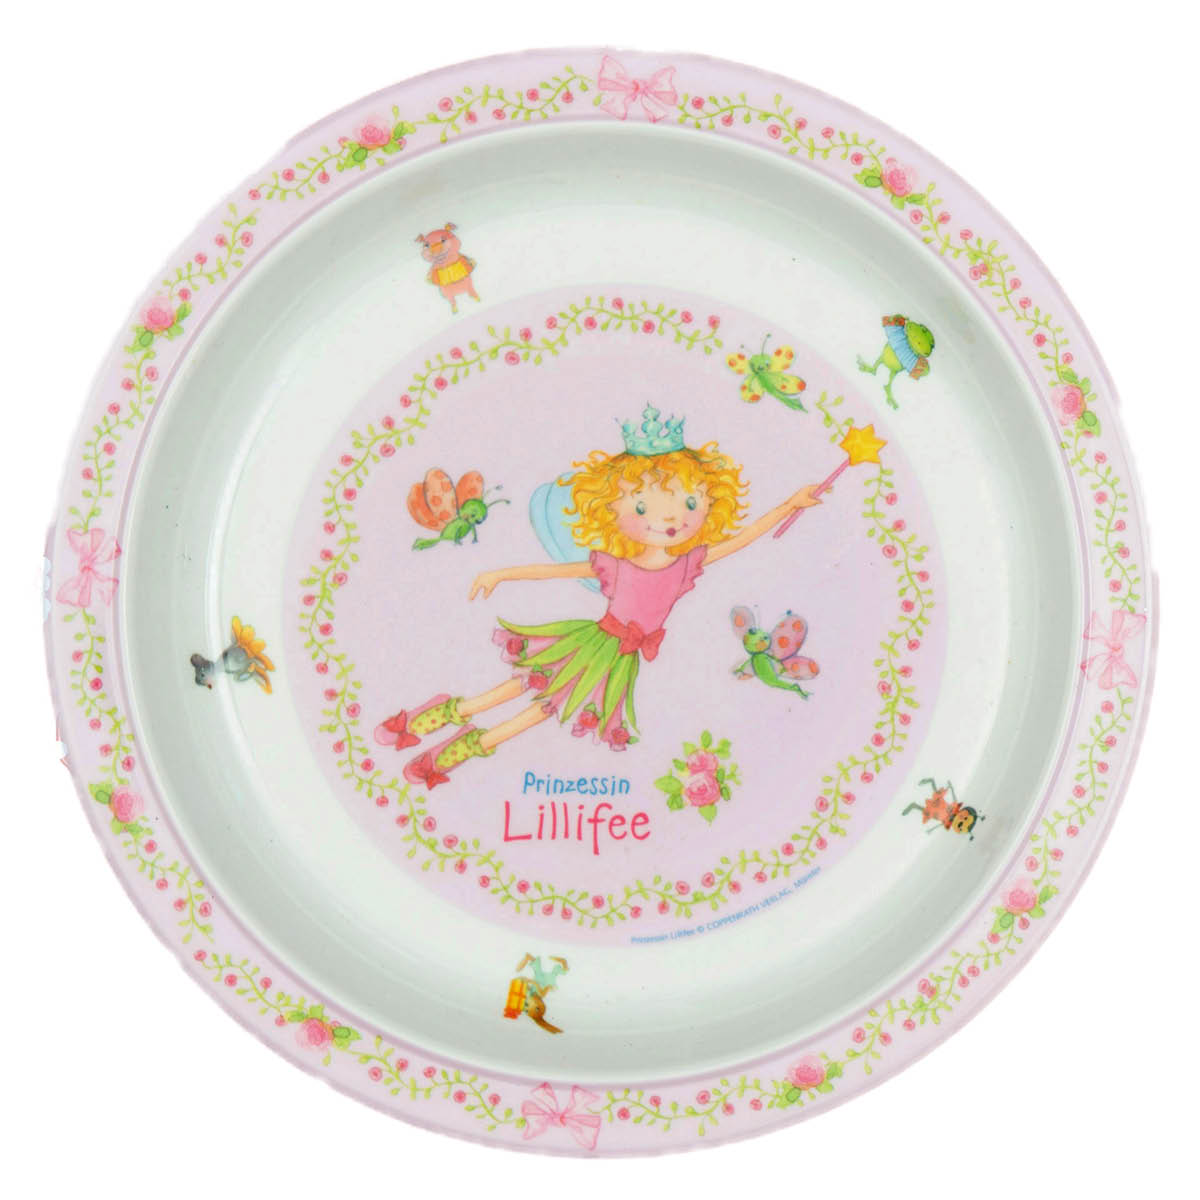 Princess Lillifee Plate